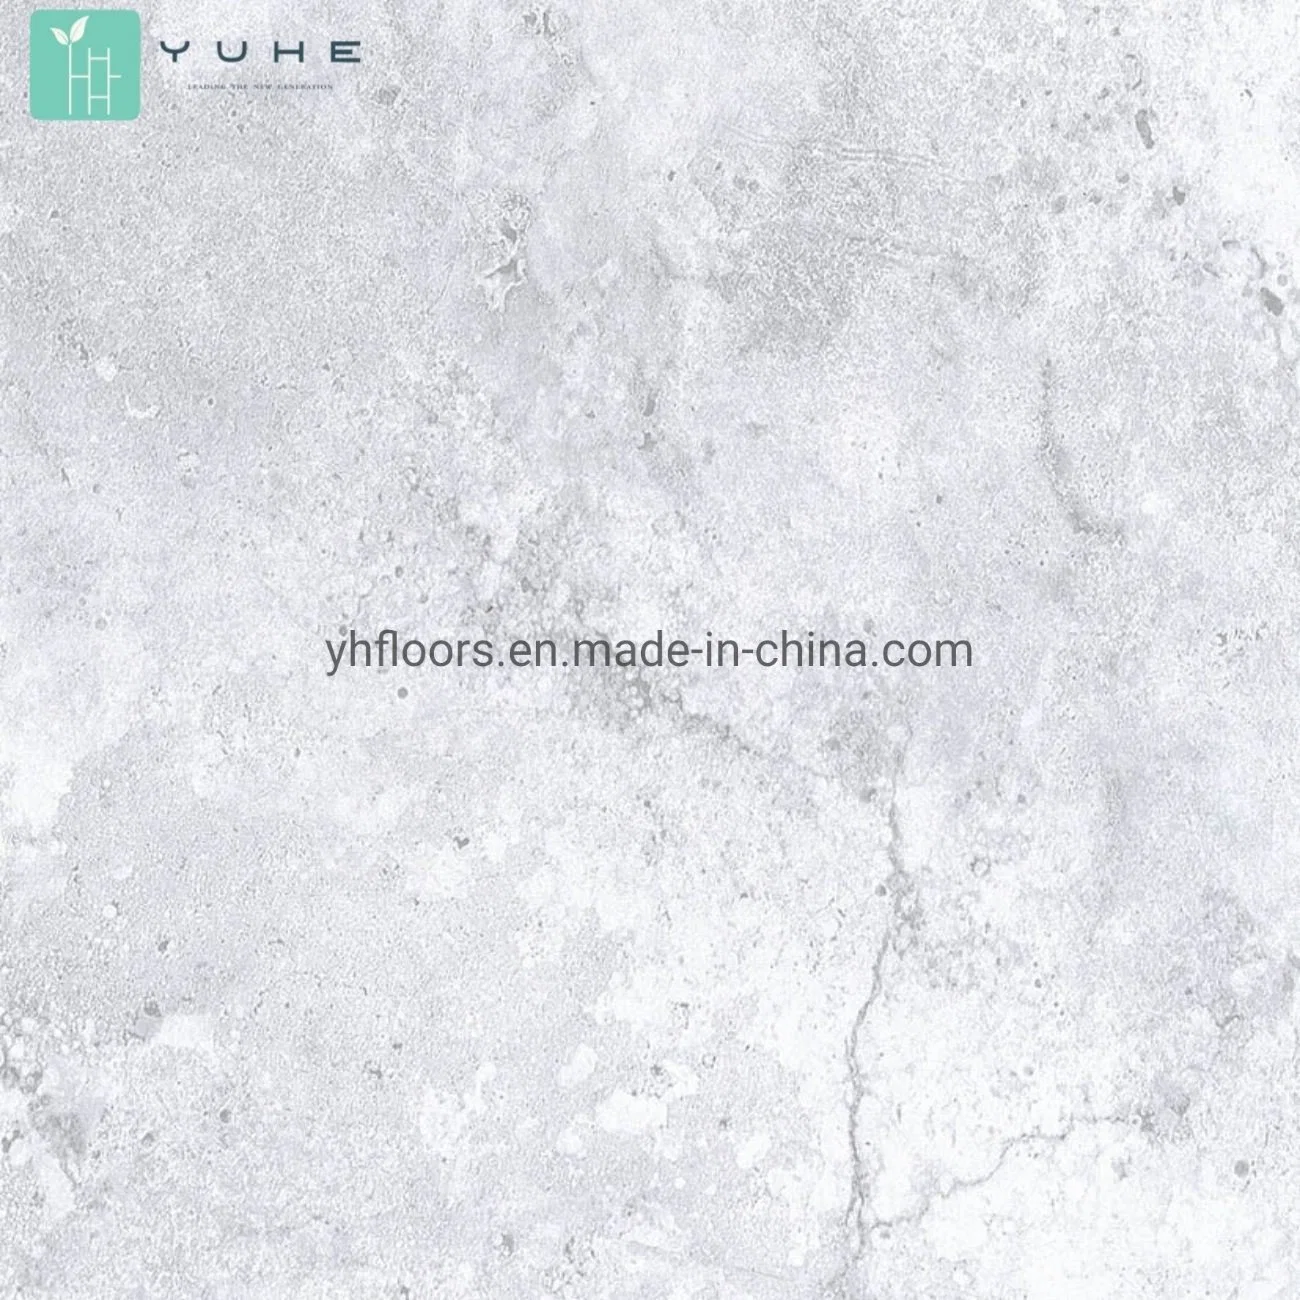 White Cotton Stone Plate 100% Waterproof Spc Rigid Floor for Kitchens & Bathroom Use Floor Tile Yh101-10